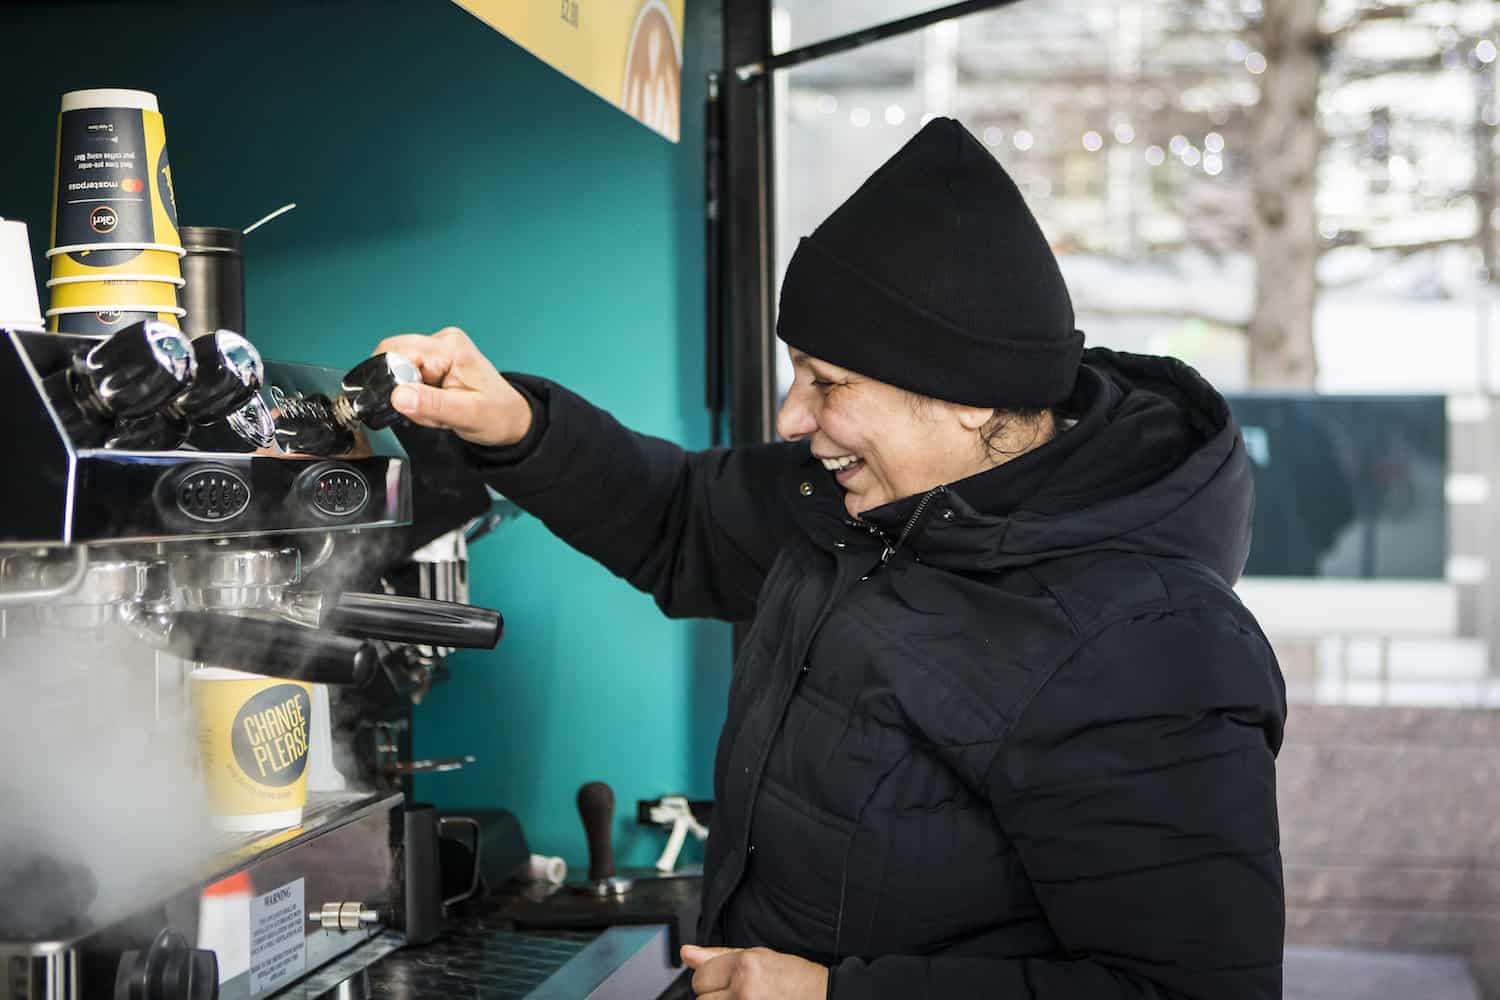 Meet The Social Enterprise Combating Homelessness Through Coffee  